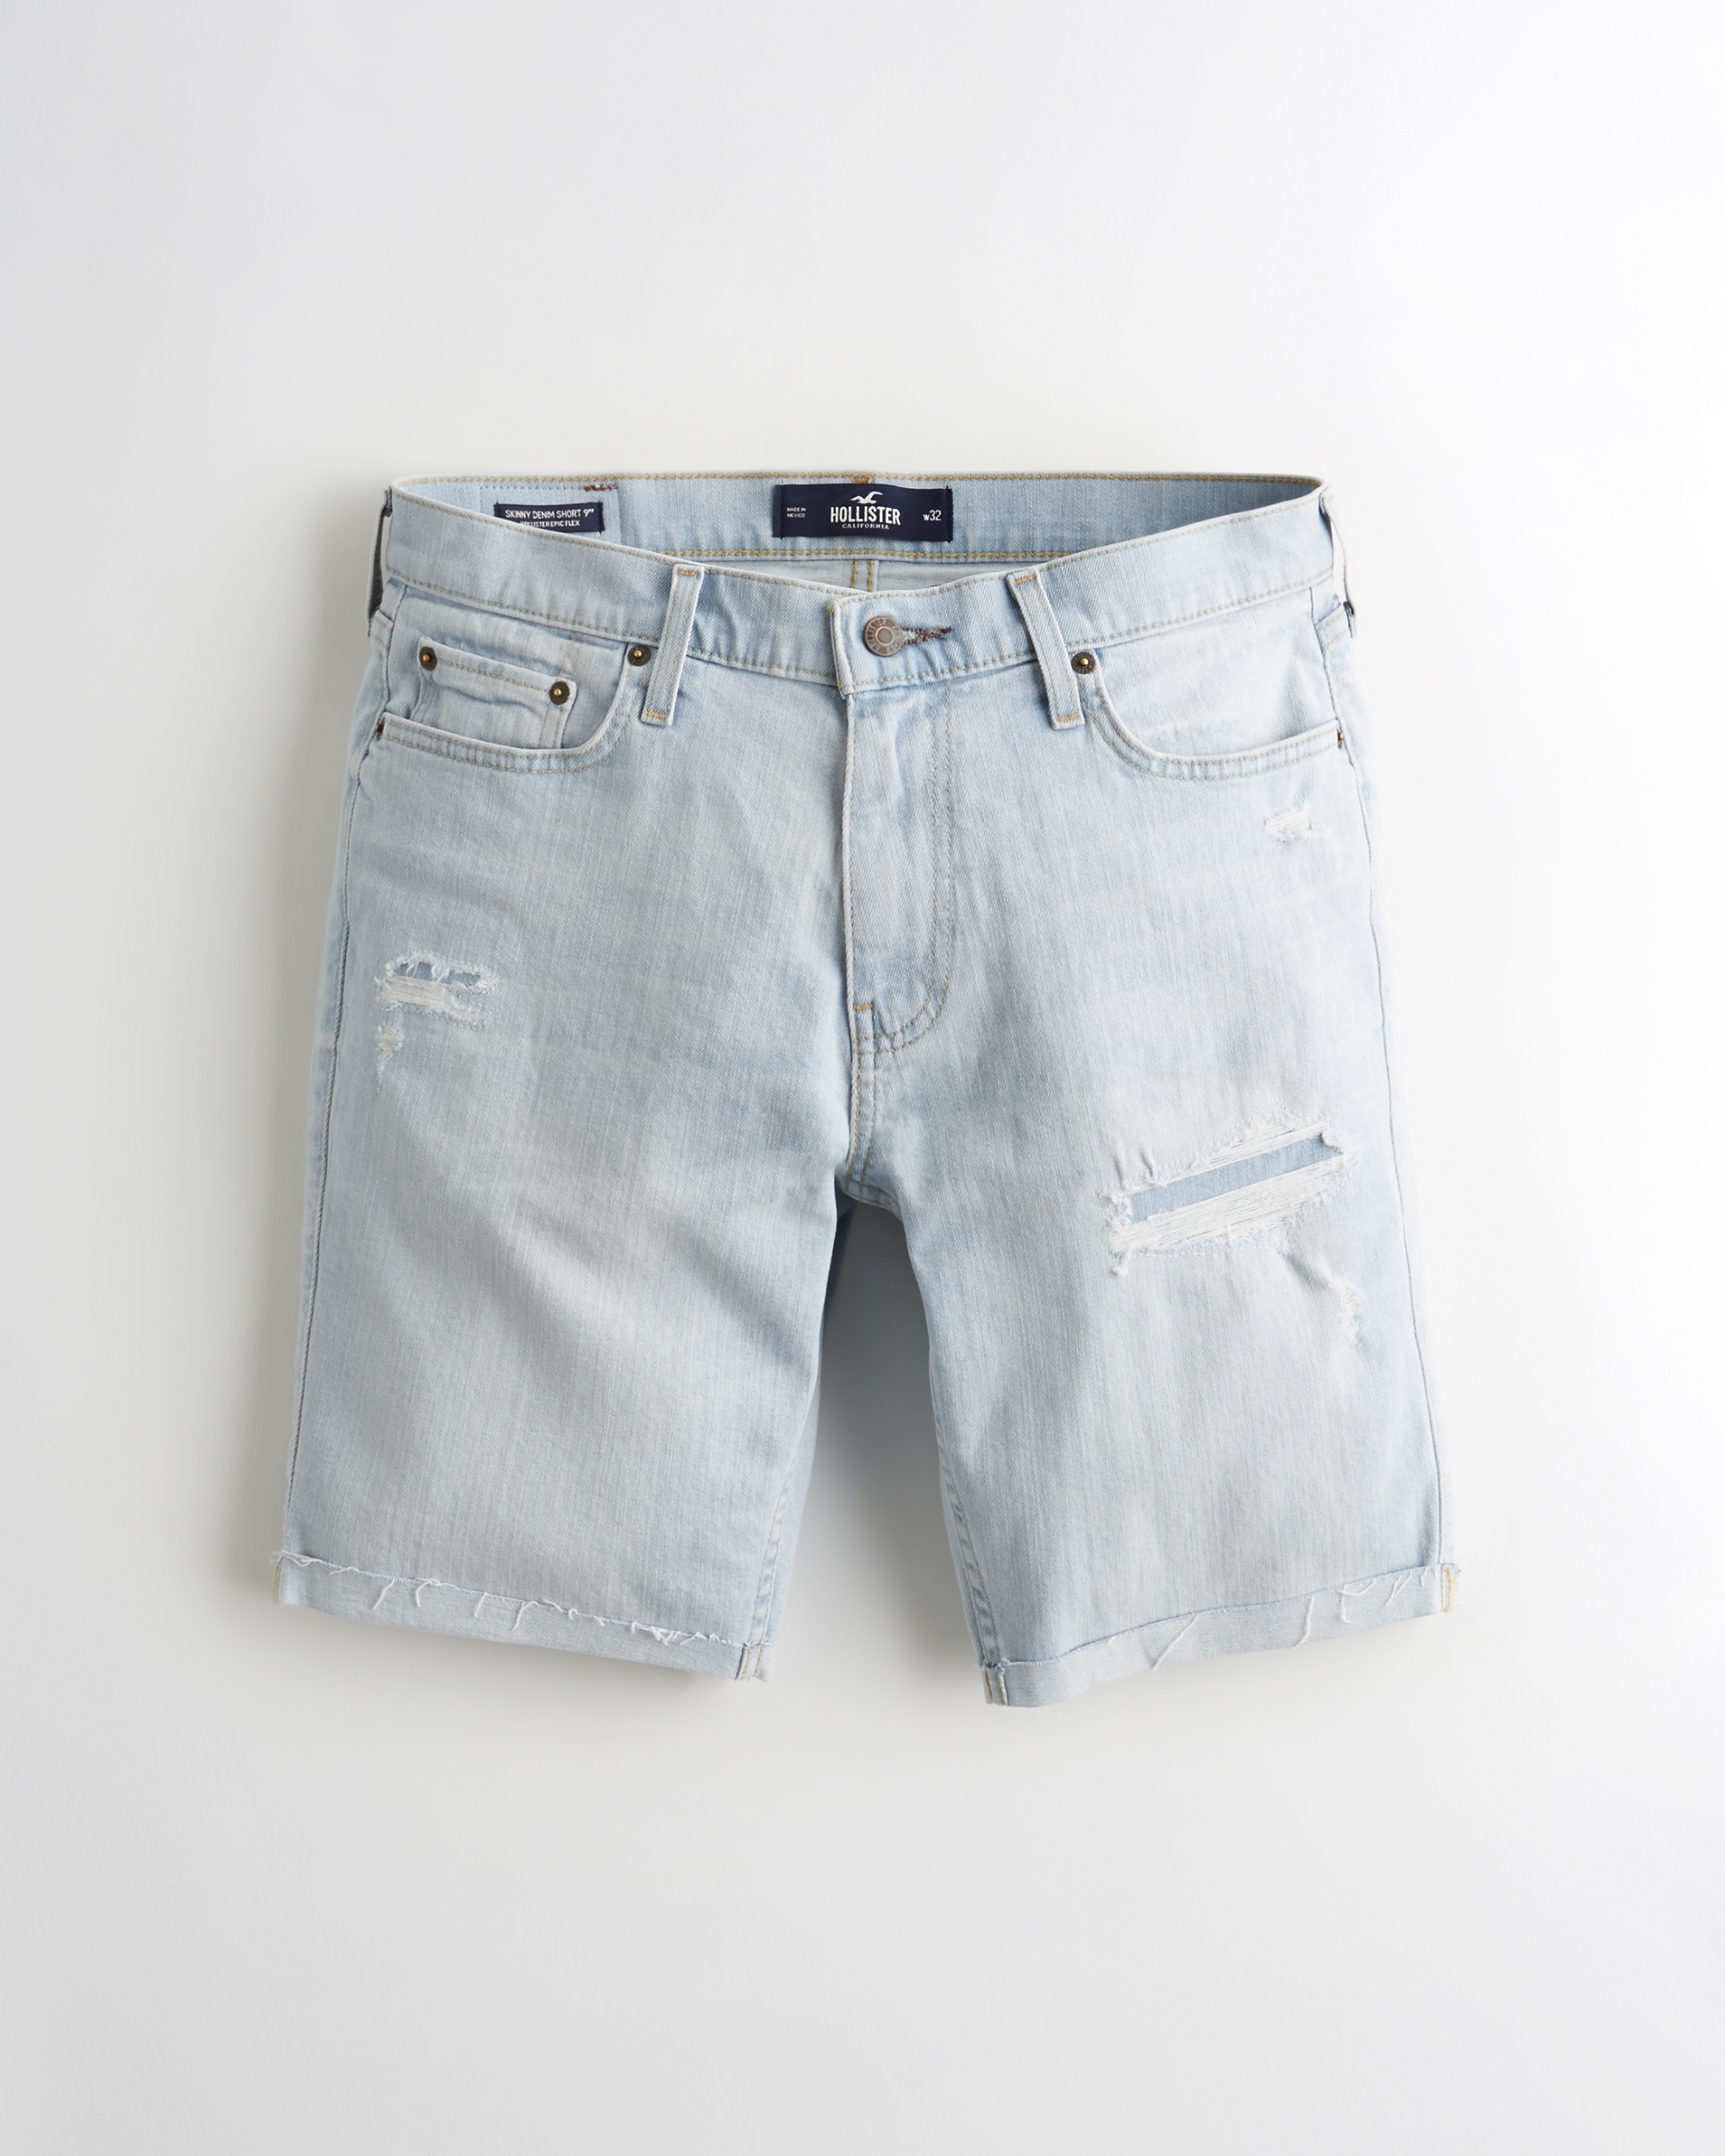 hollister short jeans length